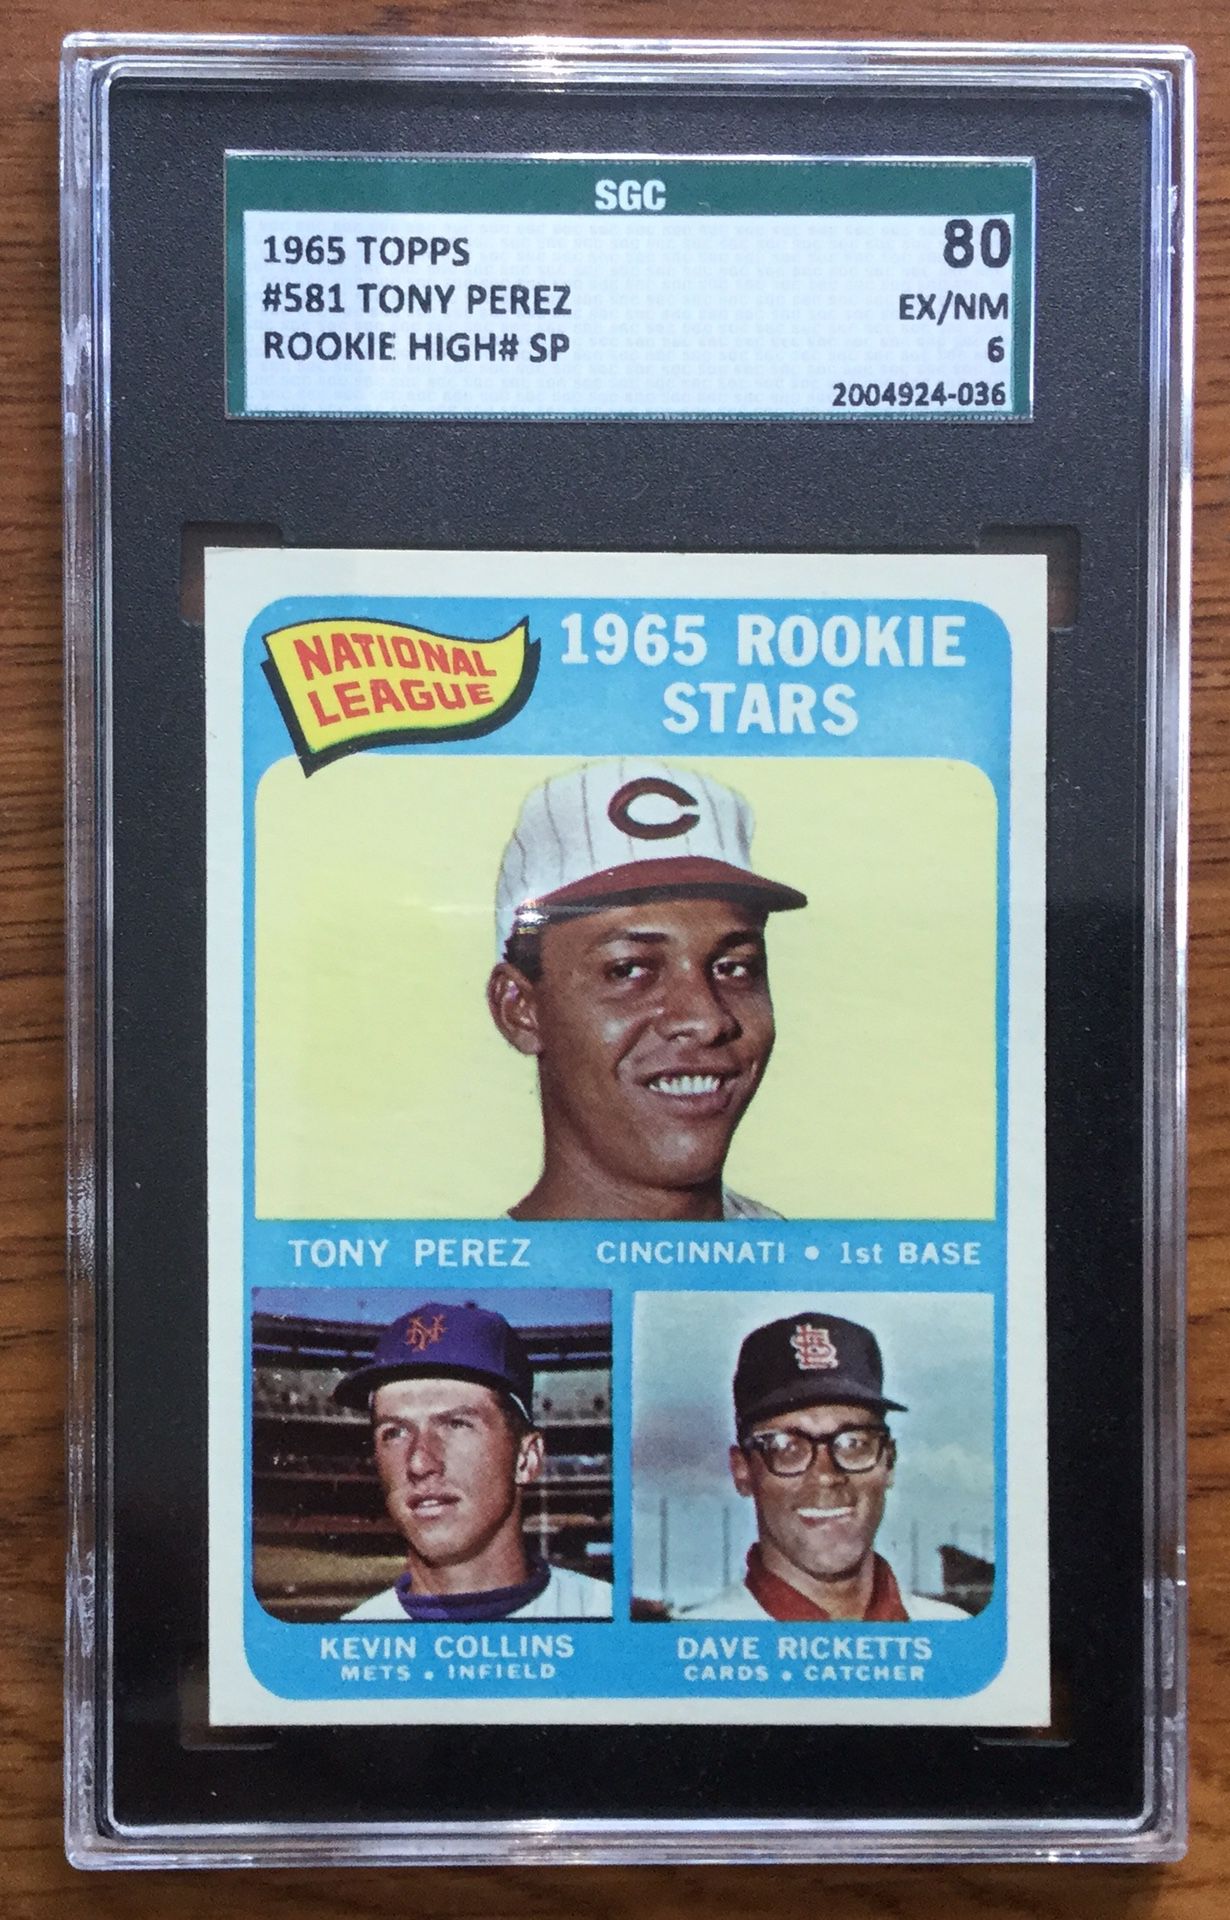 1965 Topps Baseball Rookie Card - Tony Perez - Cincinnati Reds High # - Short Print